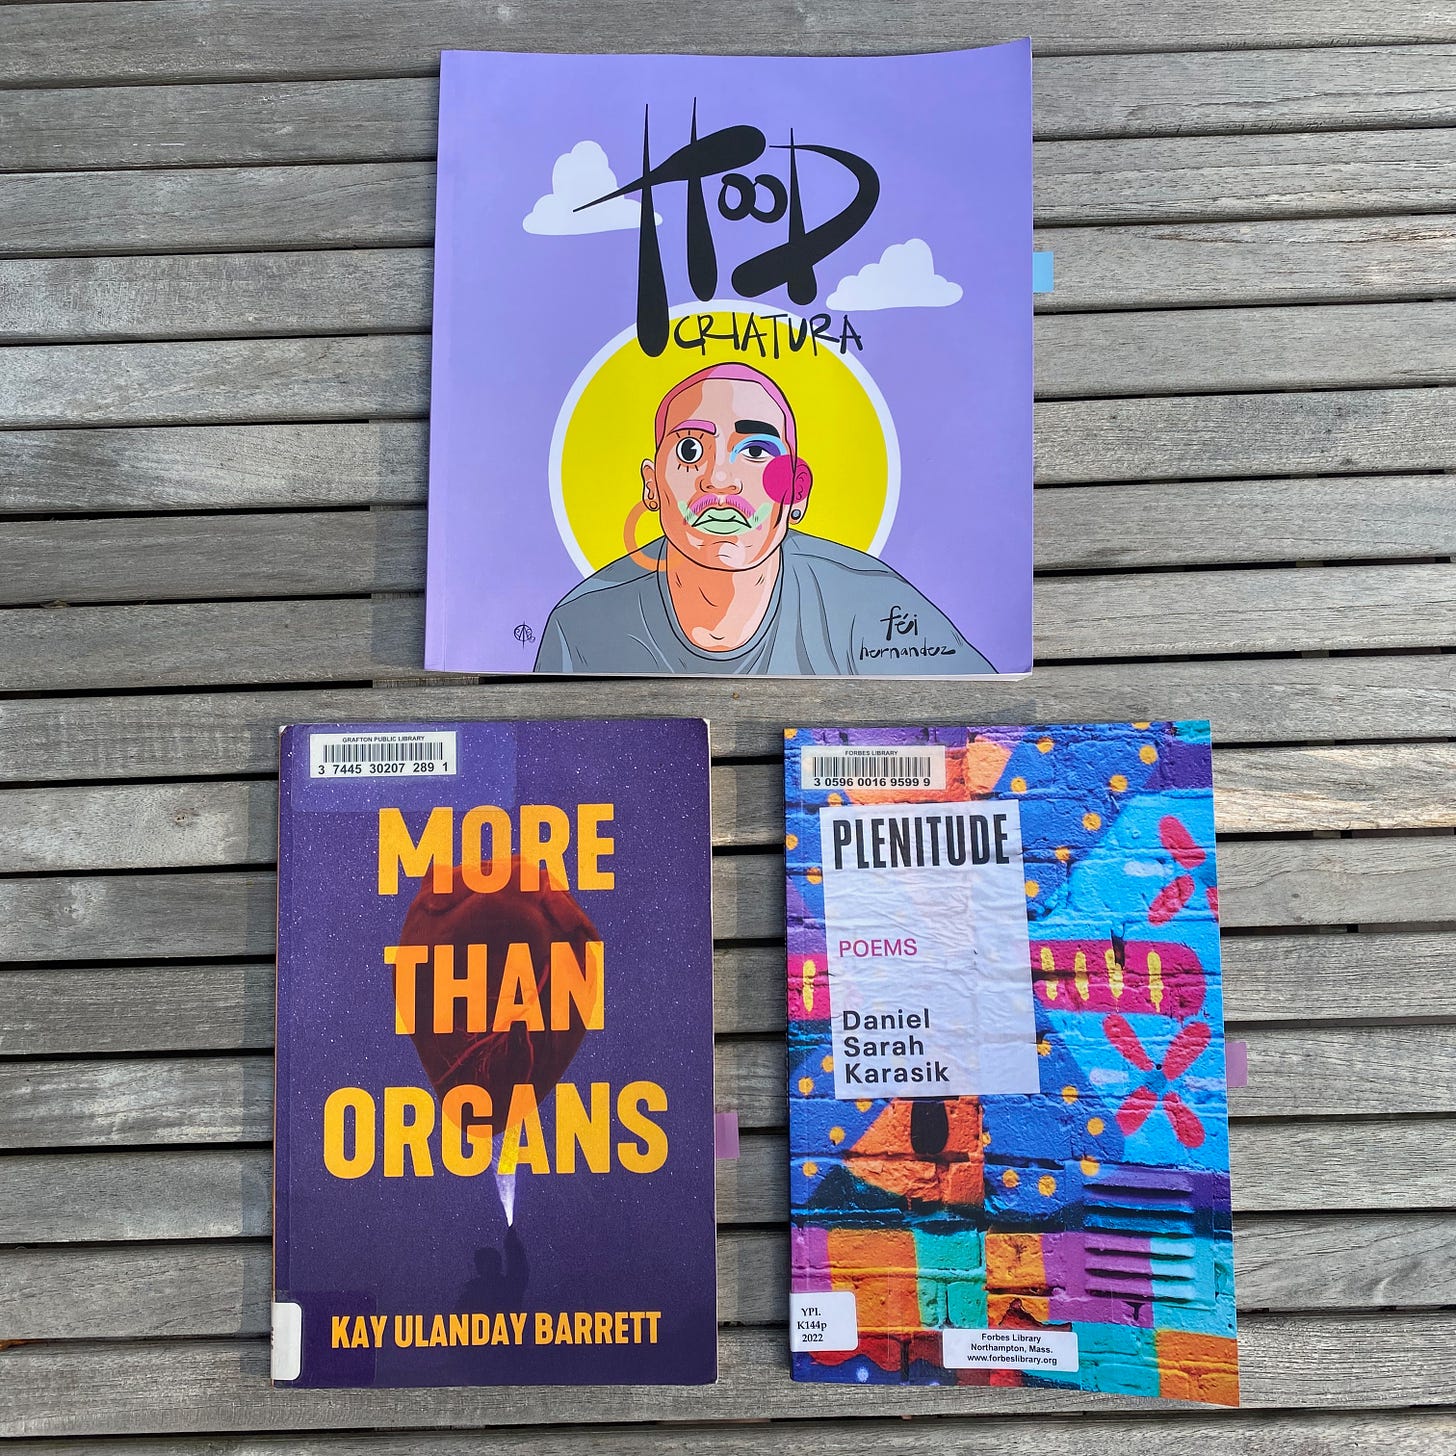 More Than Organs by Kay Ulanday Barrett, Plentitude by Daniel Sarah Karasik, and Hood Criatura by féi hernandez lie flat on a porch table.